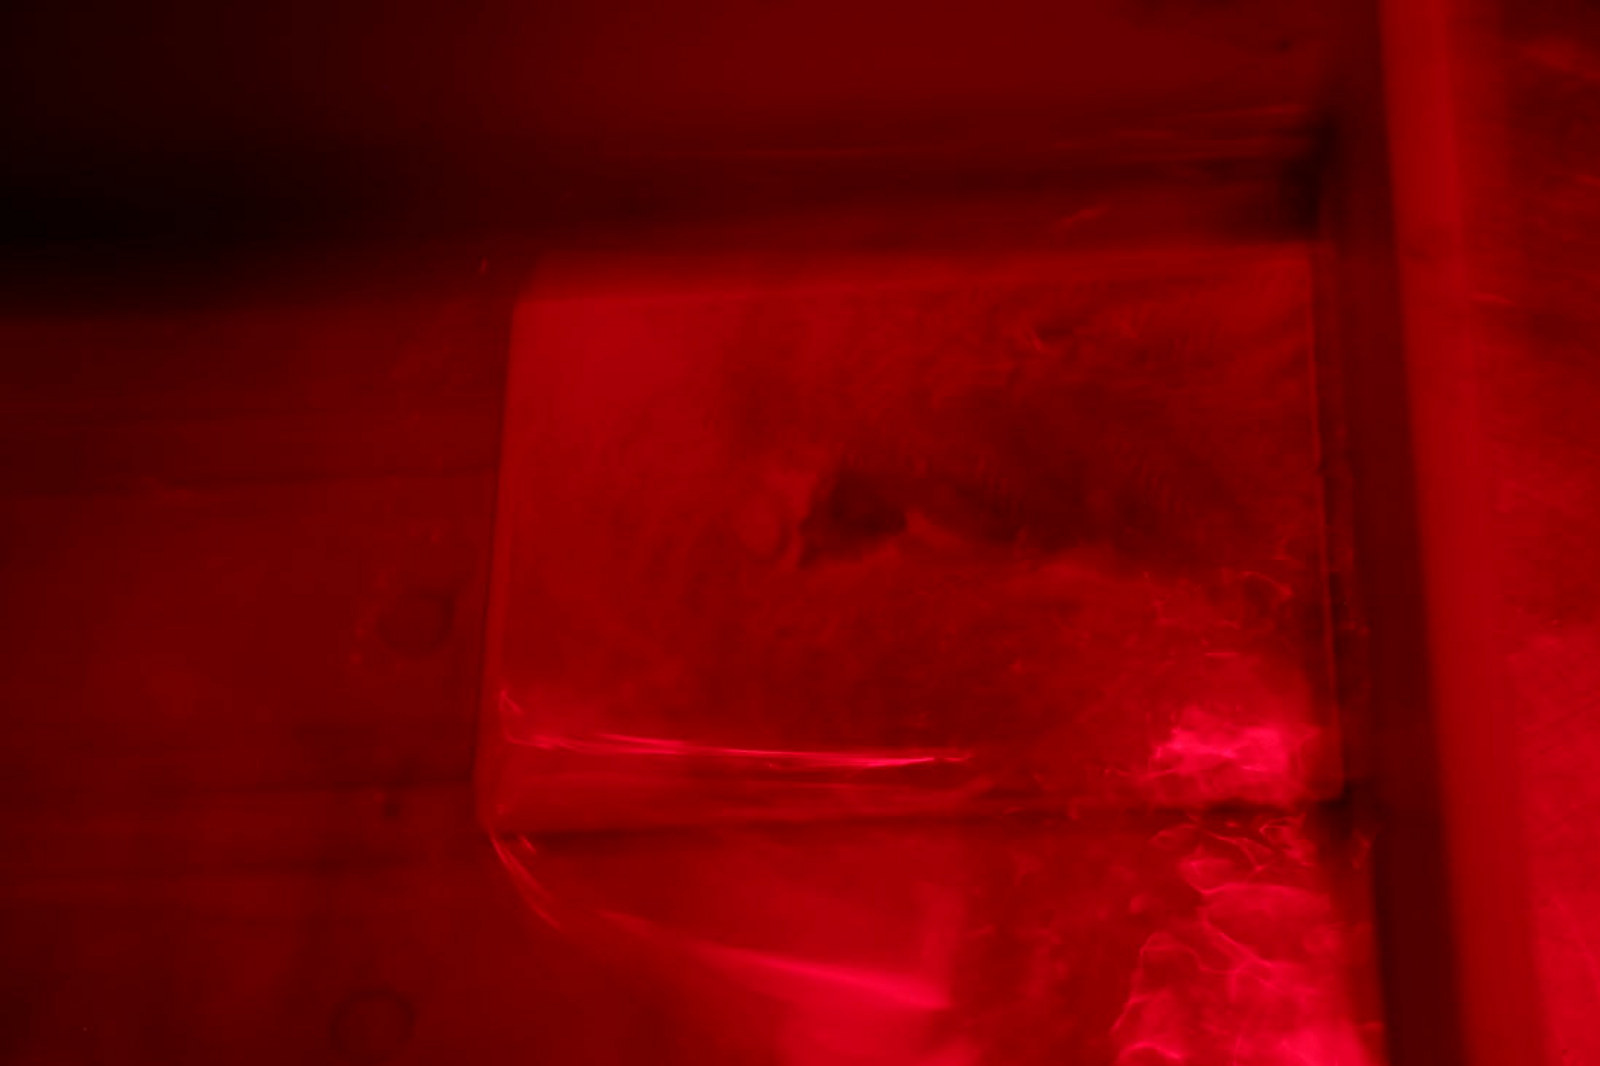 Red light illuminating plate in liquid.